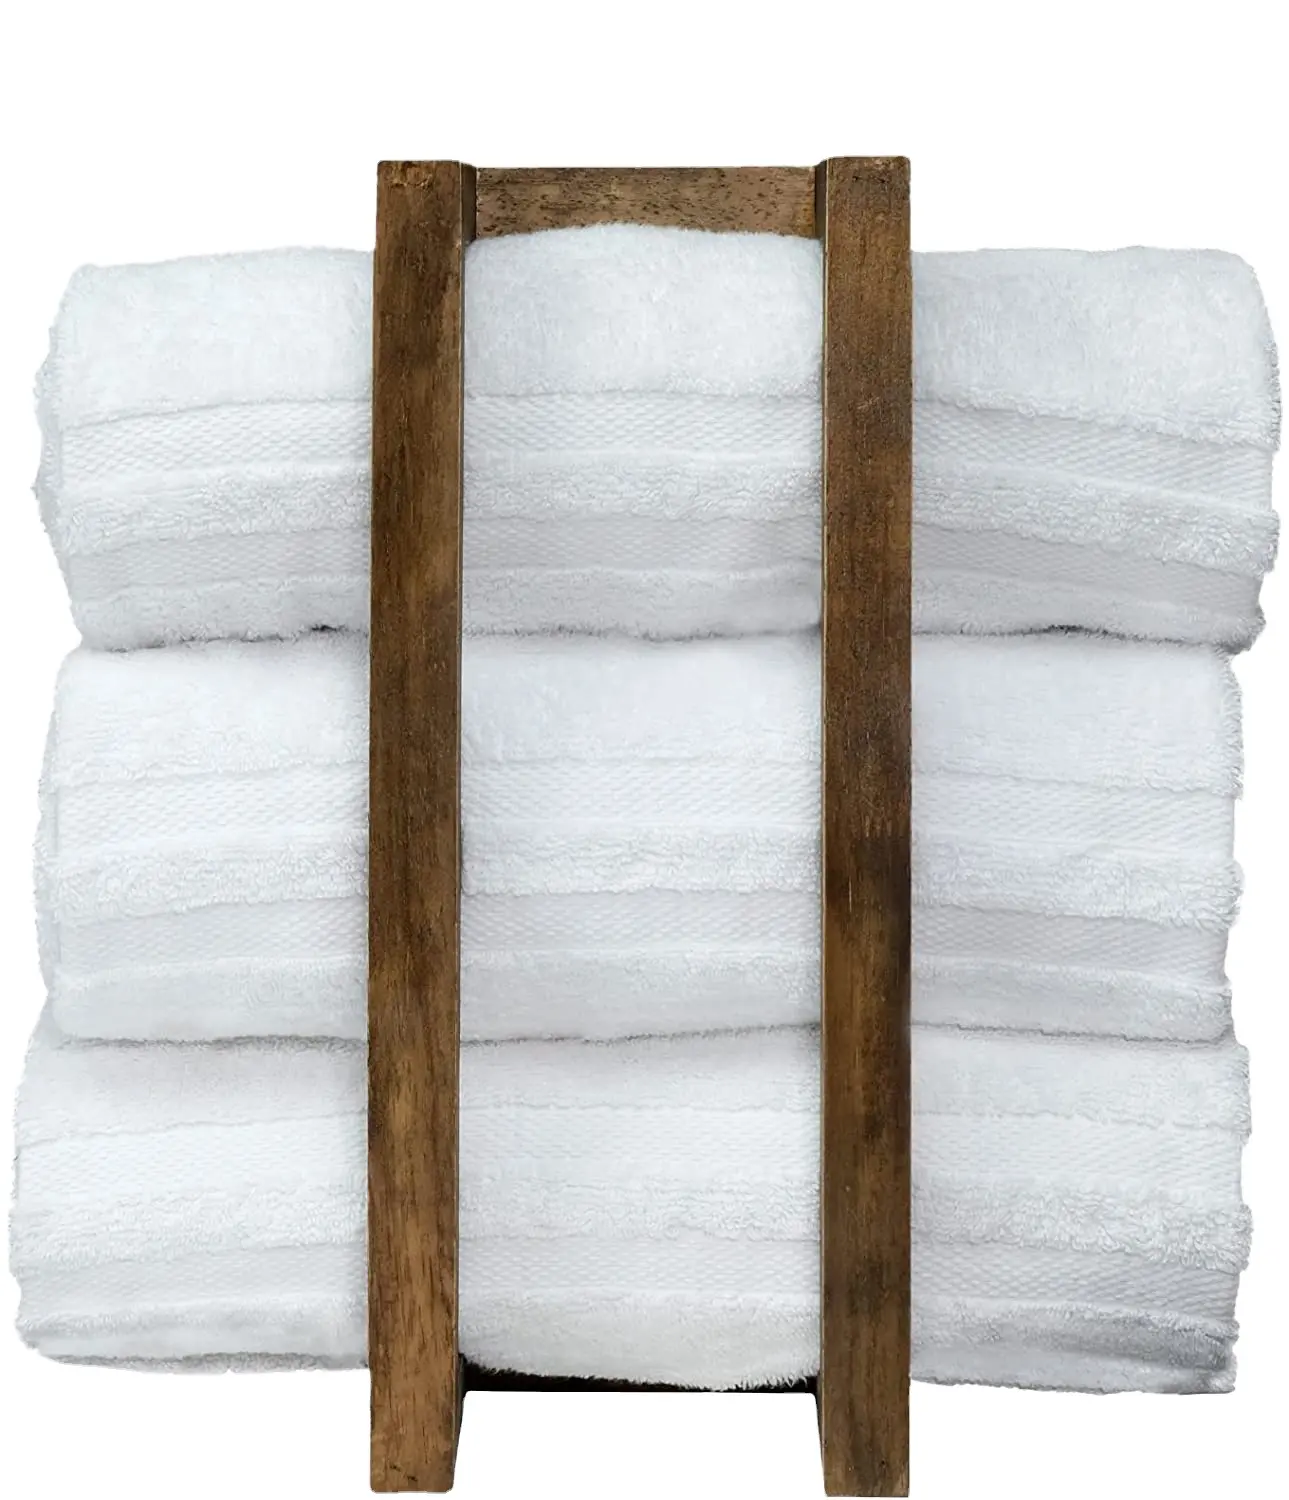 Wooden Wall-Mounted-Towel Rack Pack of 2 Wall Towel Rack wooden floating Towel Holder